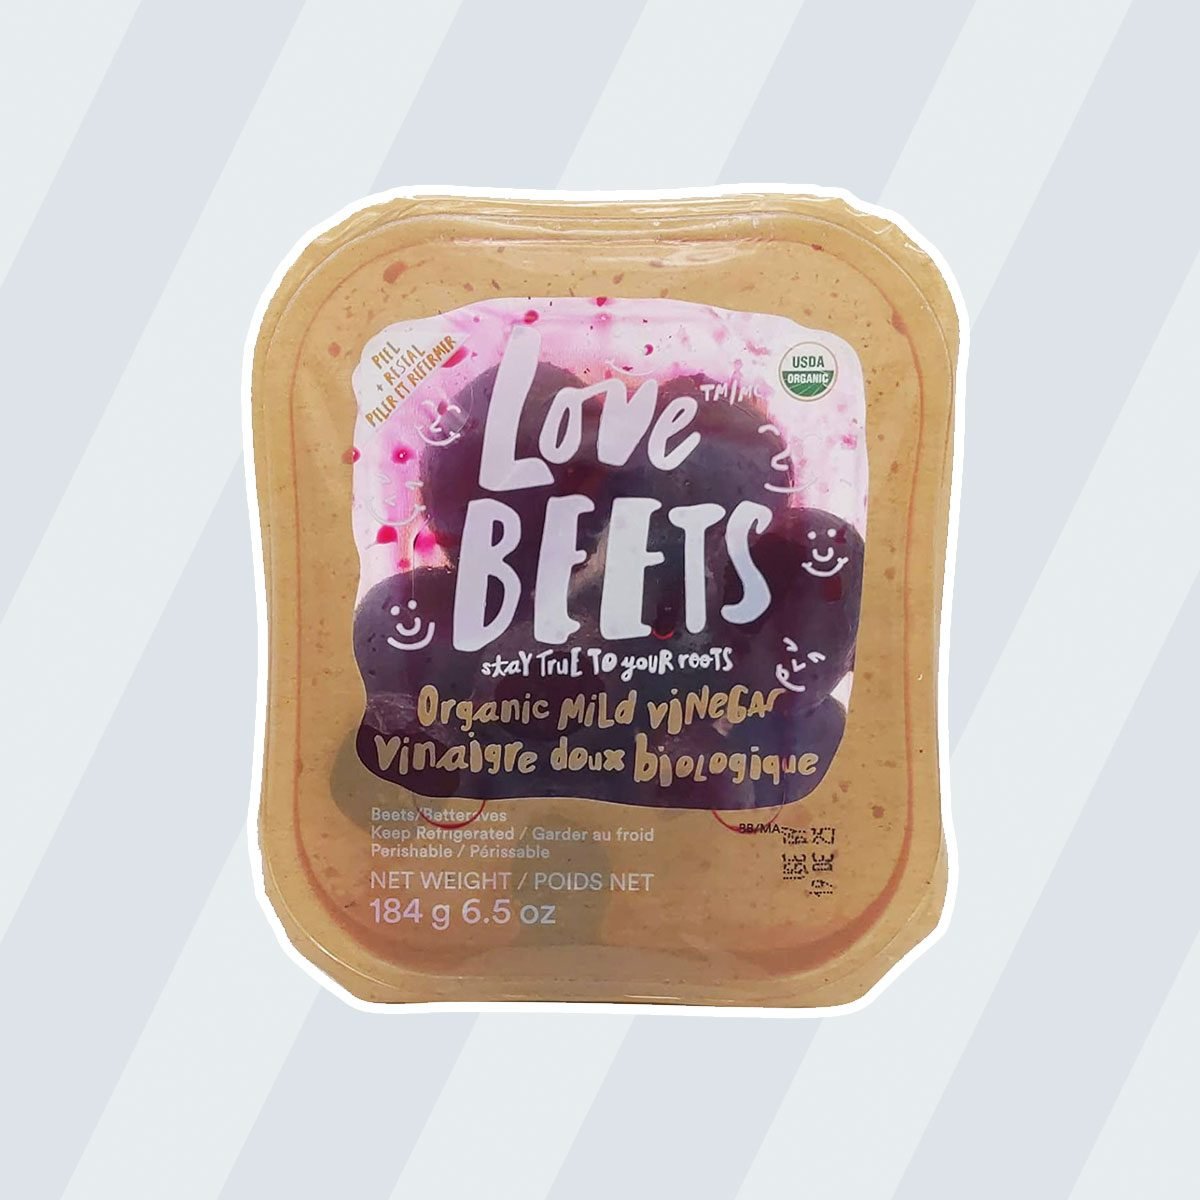 healthy snacks to buy Love Beets Organic Mild Vinegar Beets, 6.5 oz